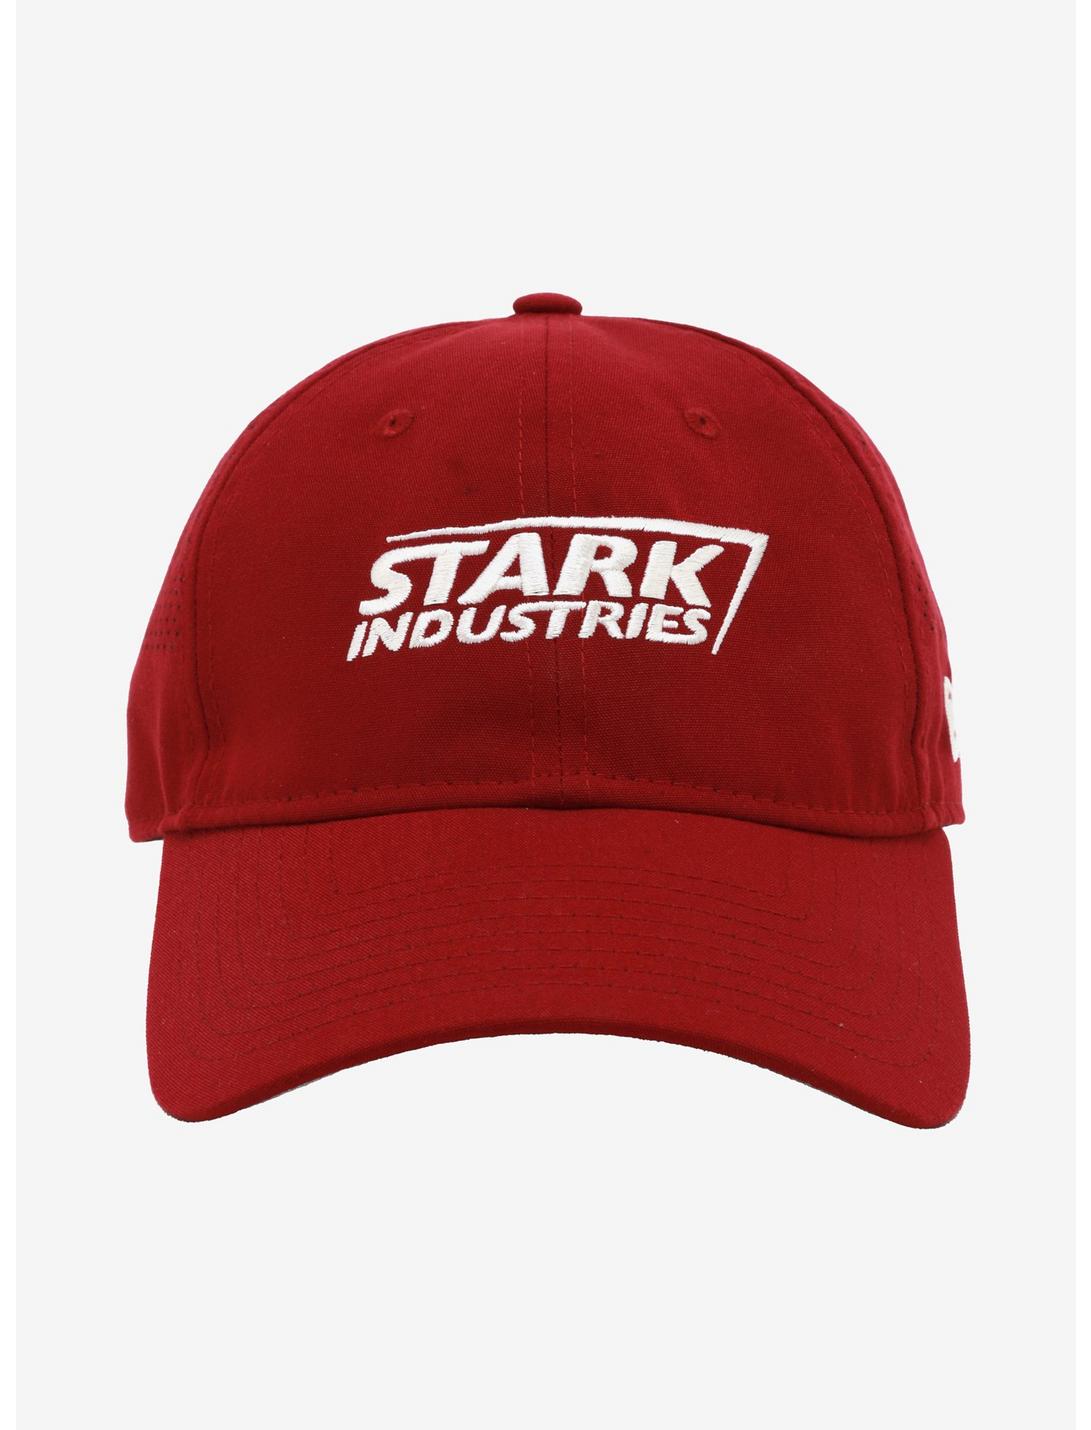 New Era Marvel Iron Man Stark Industries Cap - BoxLunch Exclusive, , hi-res